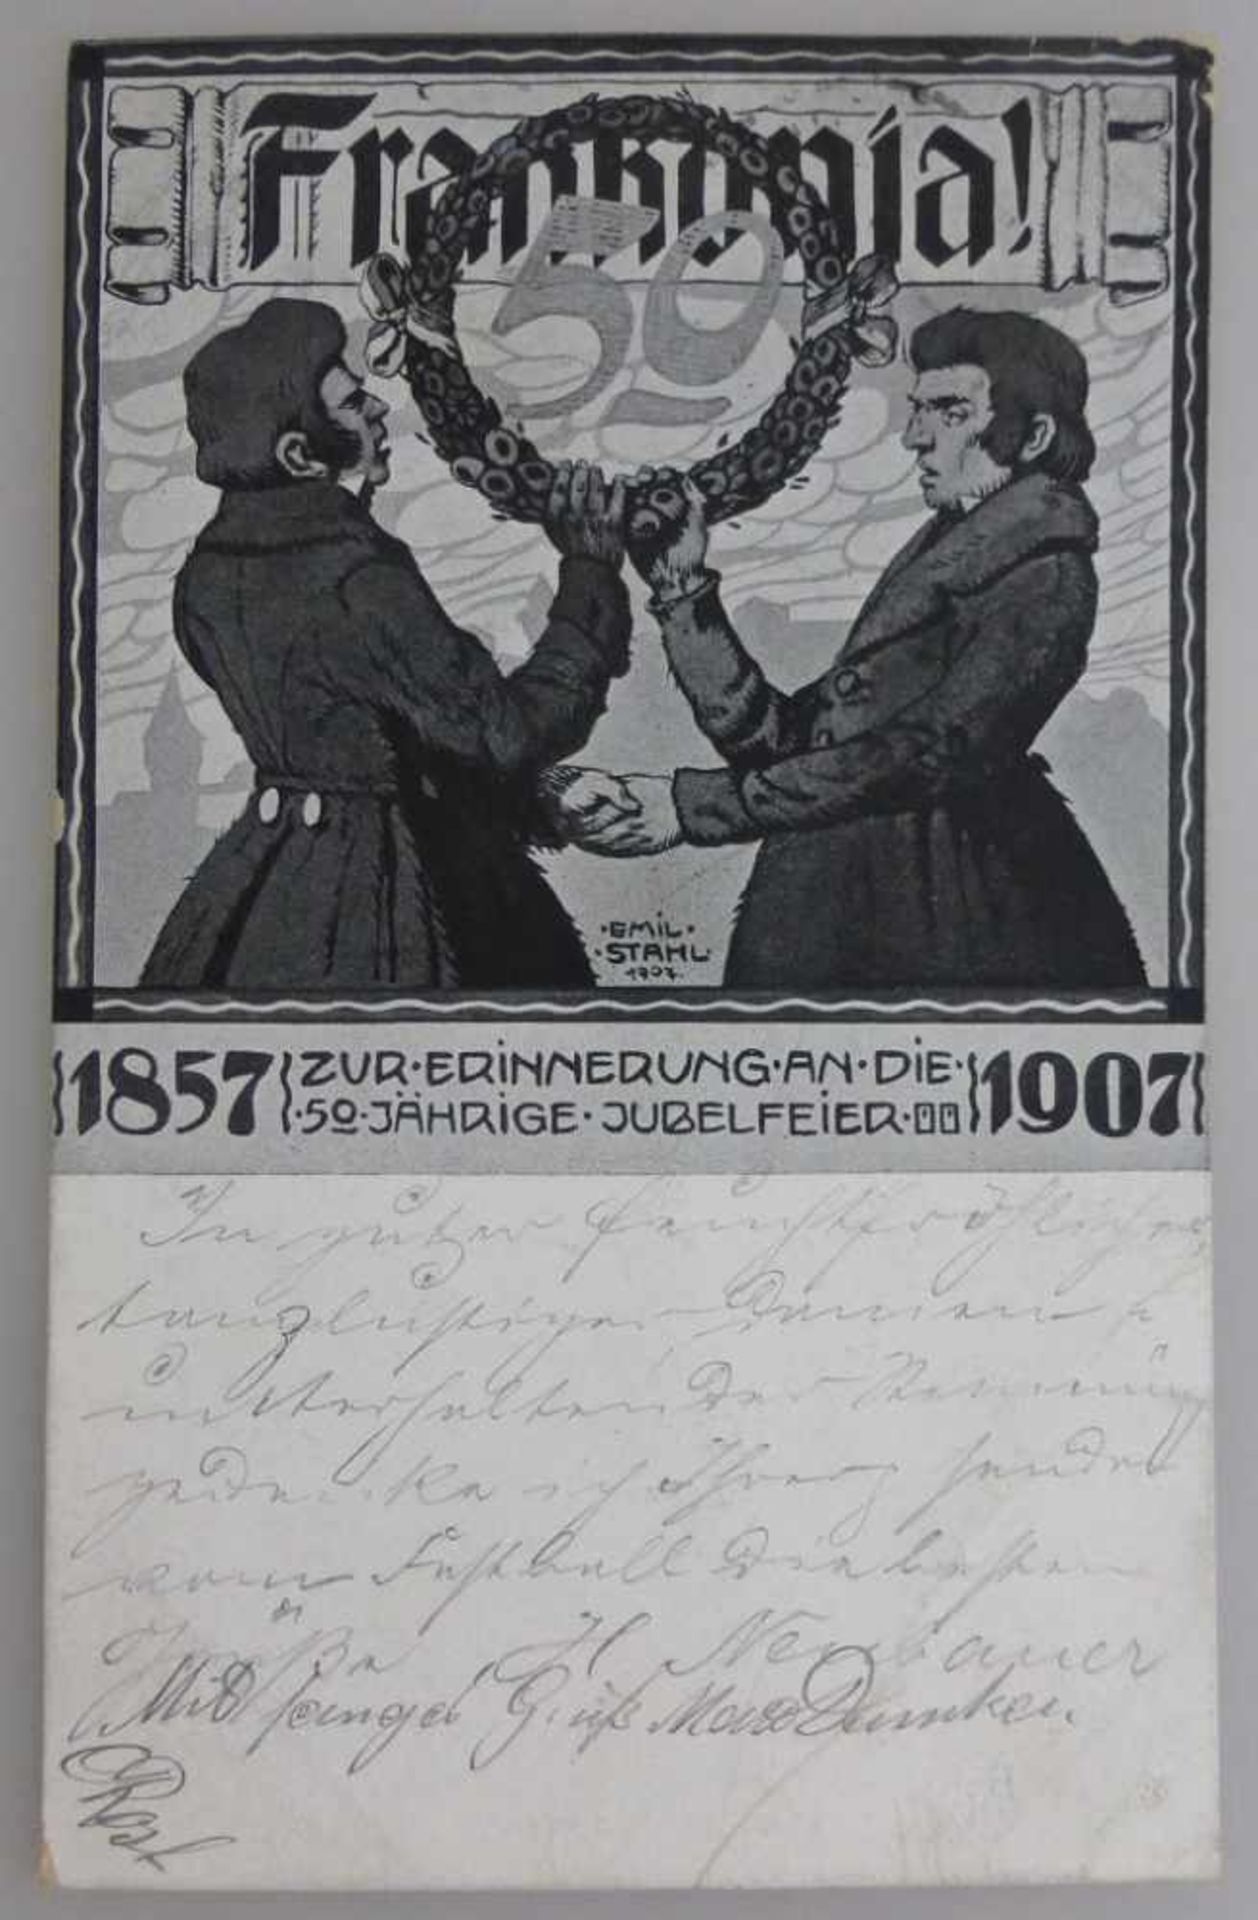 Postkarte "Frankonia" - 50jährige Jubelfeier 1857 - 1907, Emil Stahl, gel.